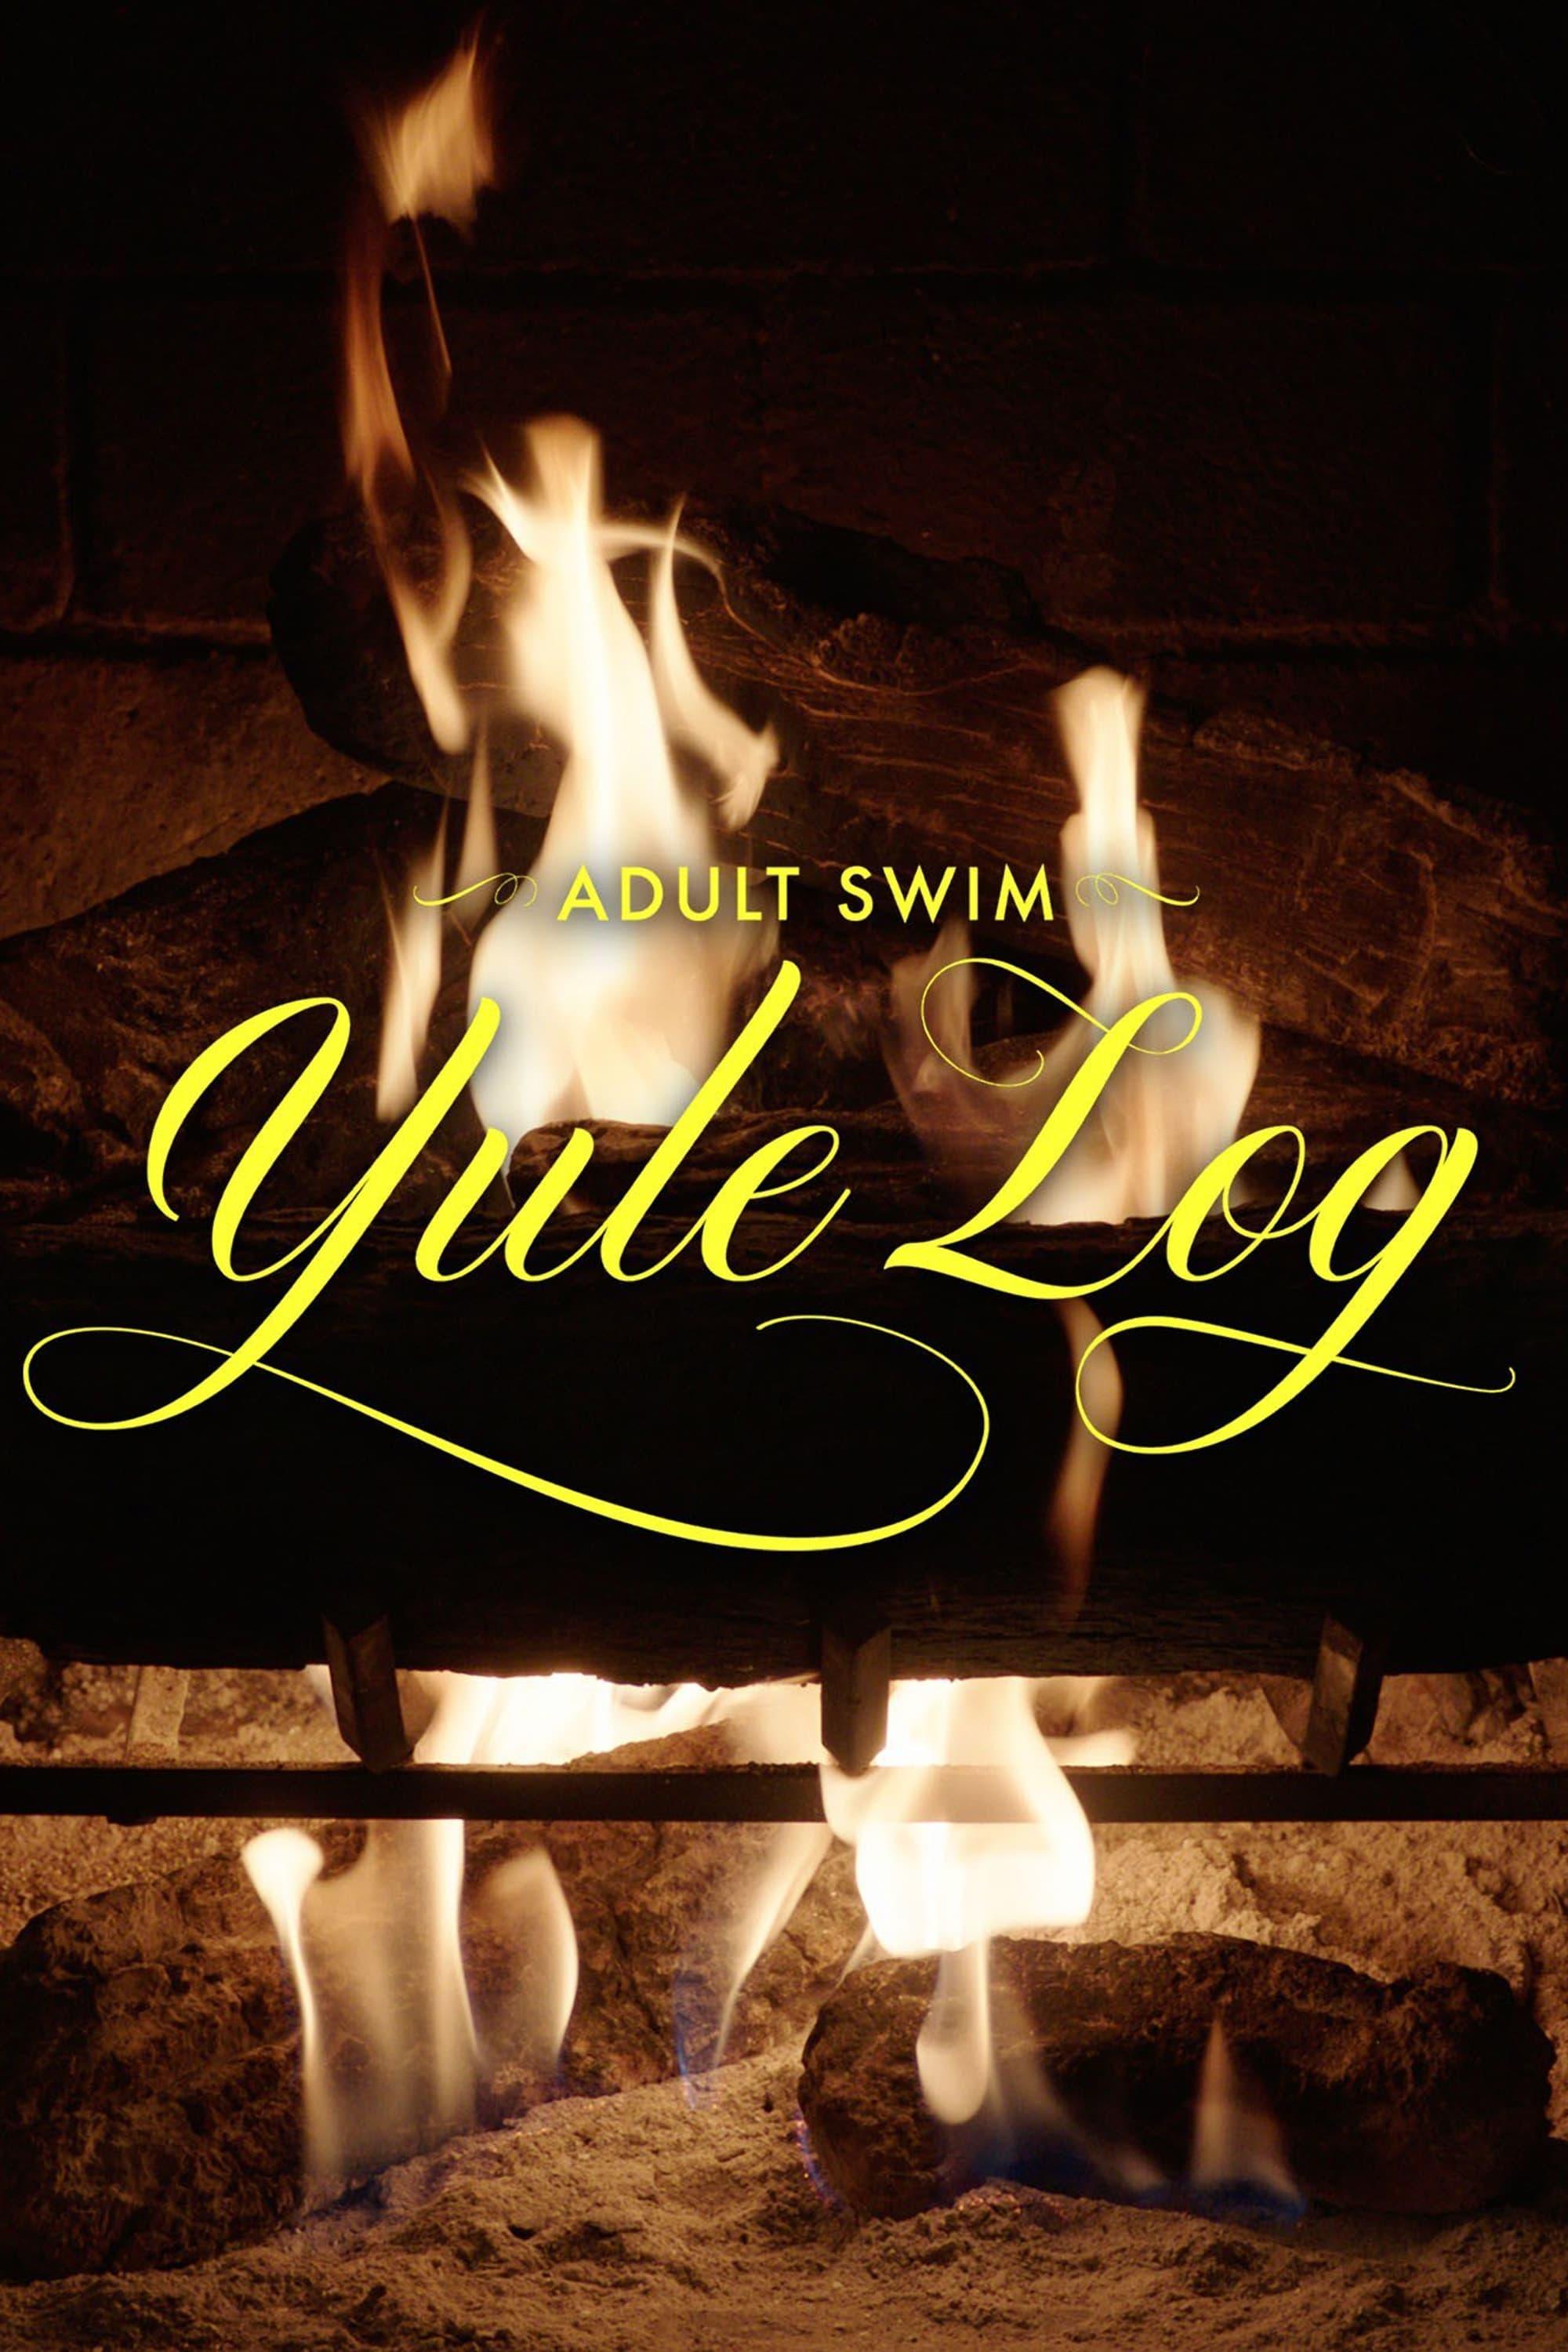 Adult Swim Yule Log (aka The Fireplace) poster